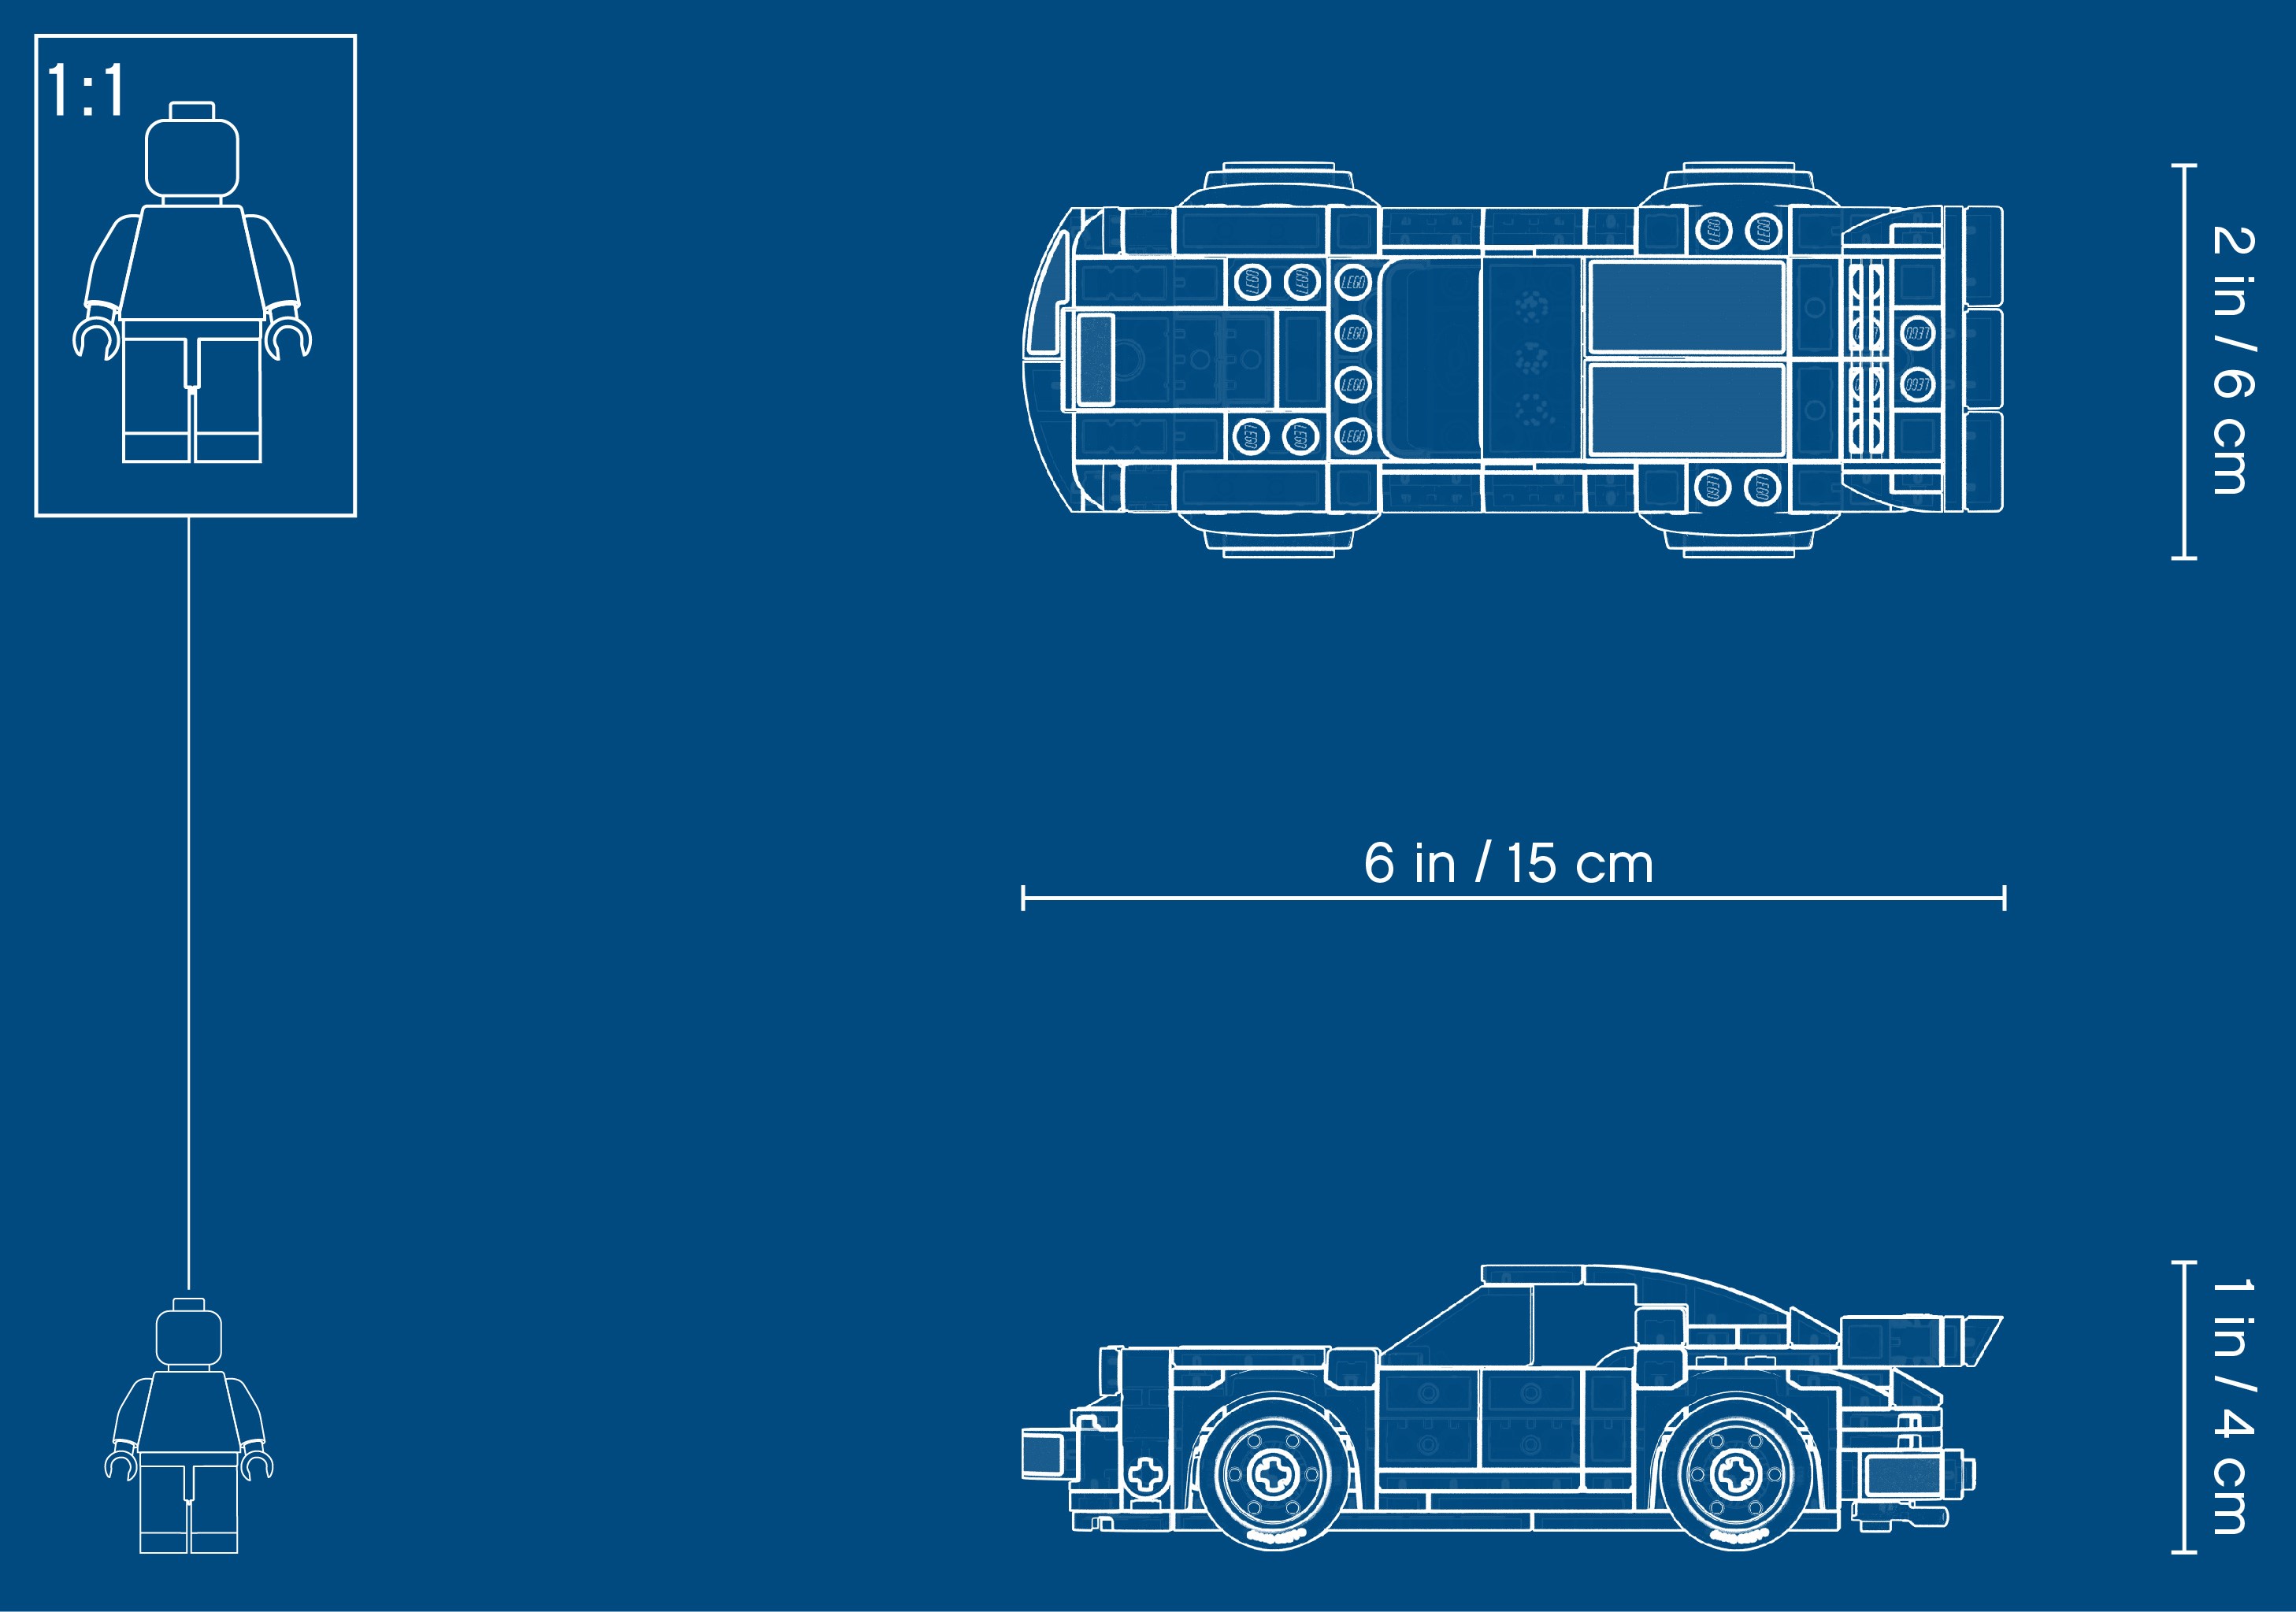 LEGO 75888 Speed Champions Porsche 911 RSR et 911 Turbo 3.0